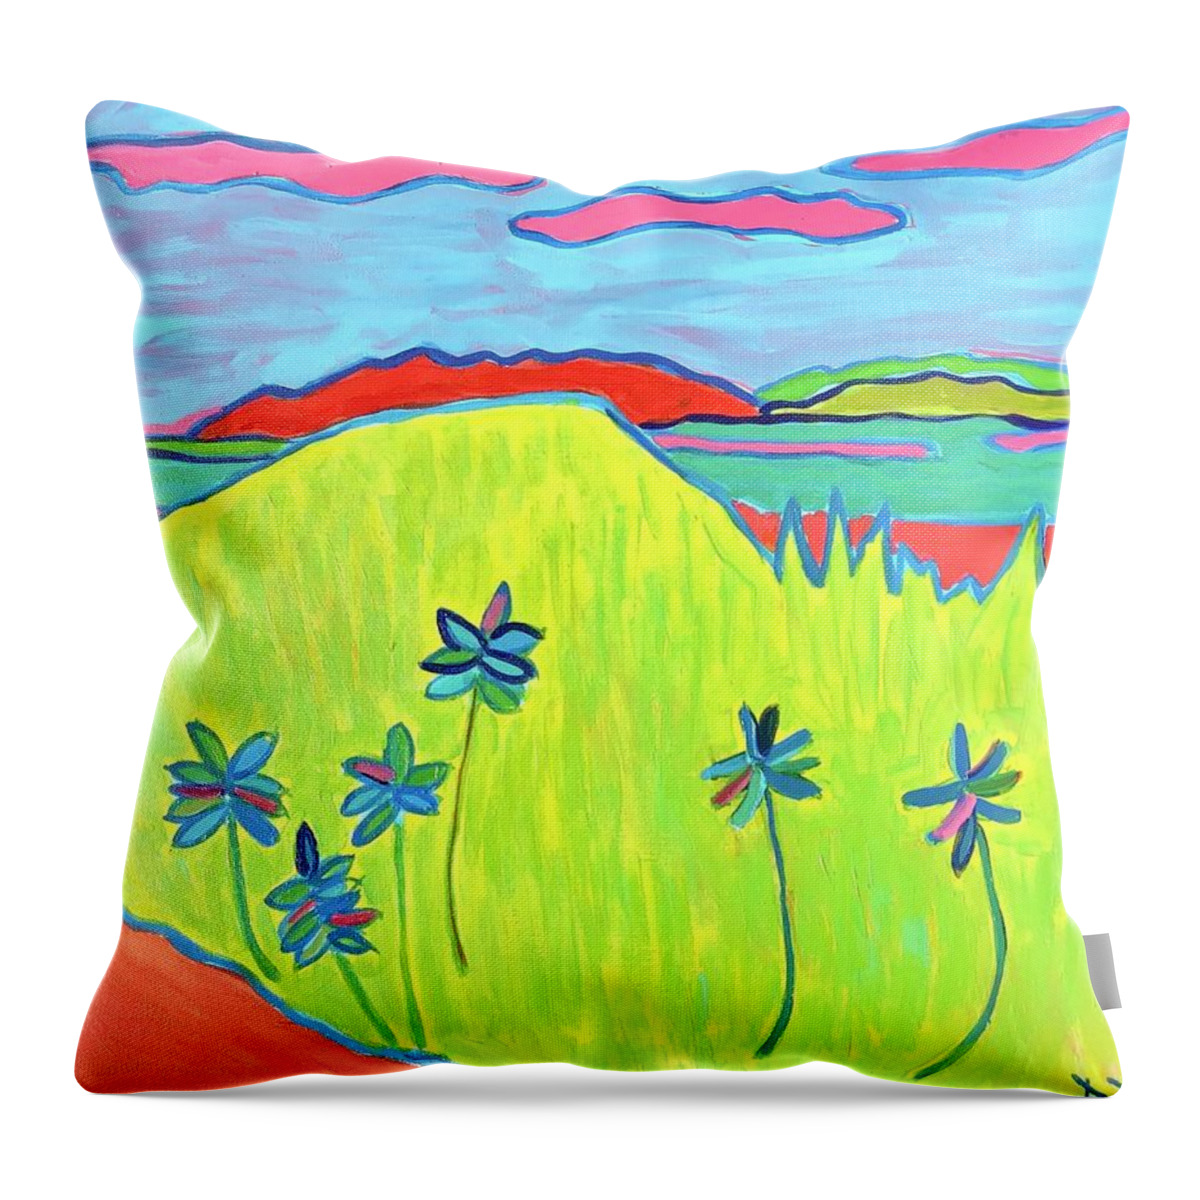 Plum Island Throw Pillow featuring the painting Plum Island by Debra Bretton Robinson